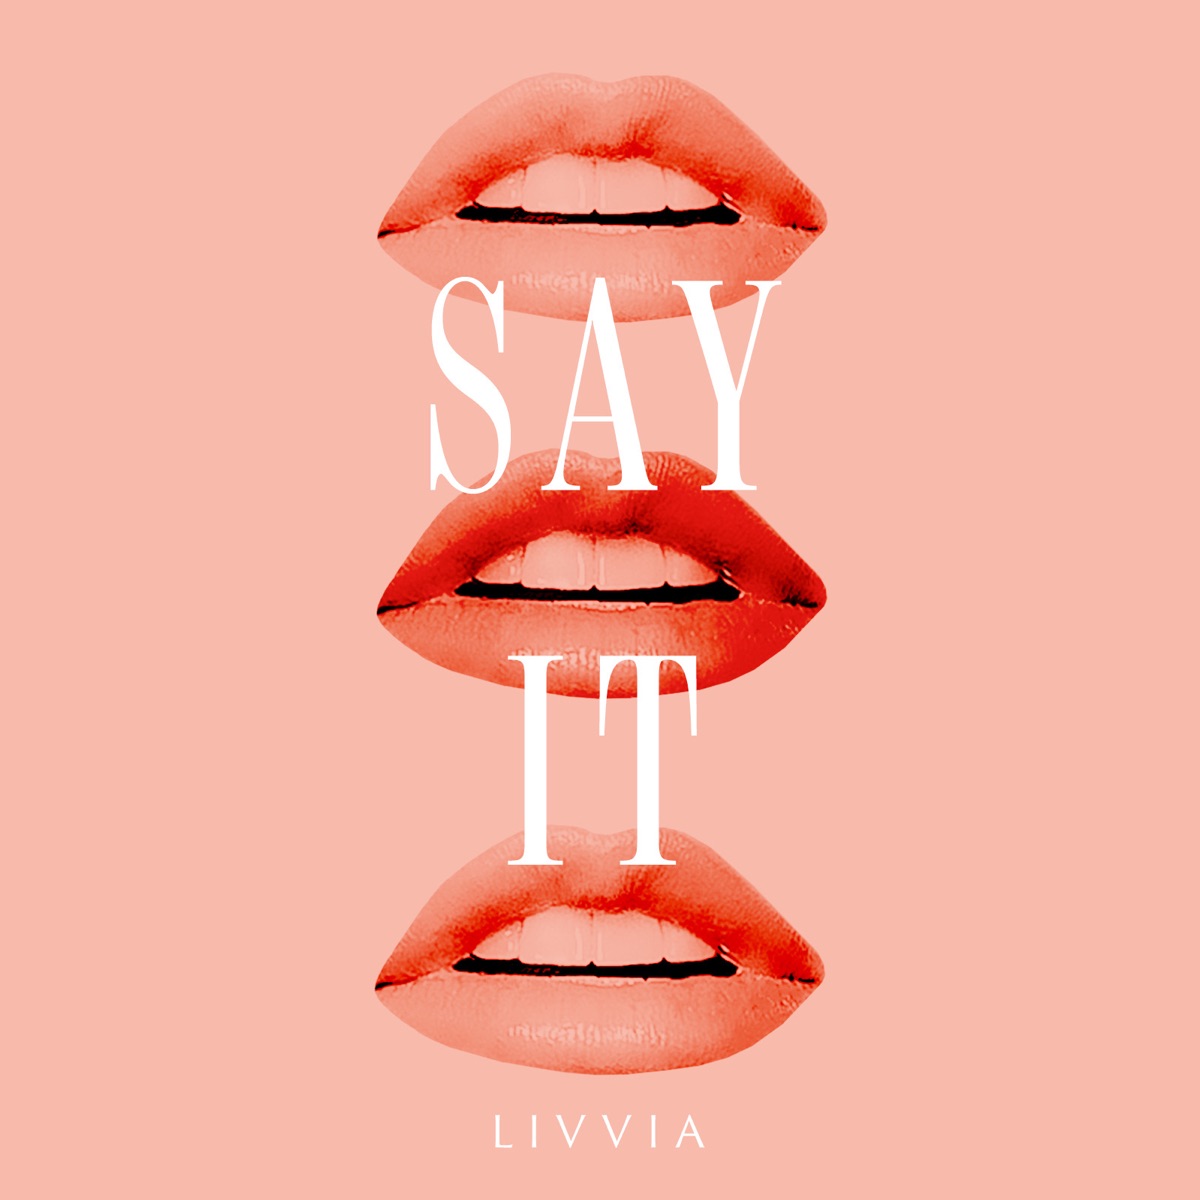 LIVVIA — Say It cover artwork